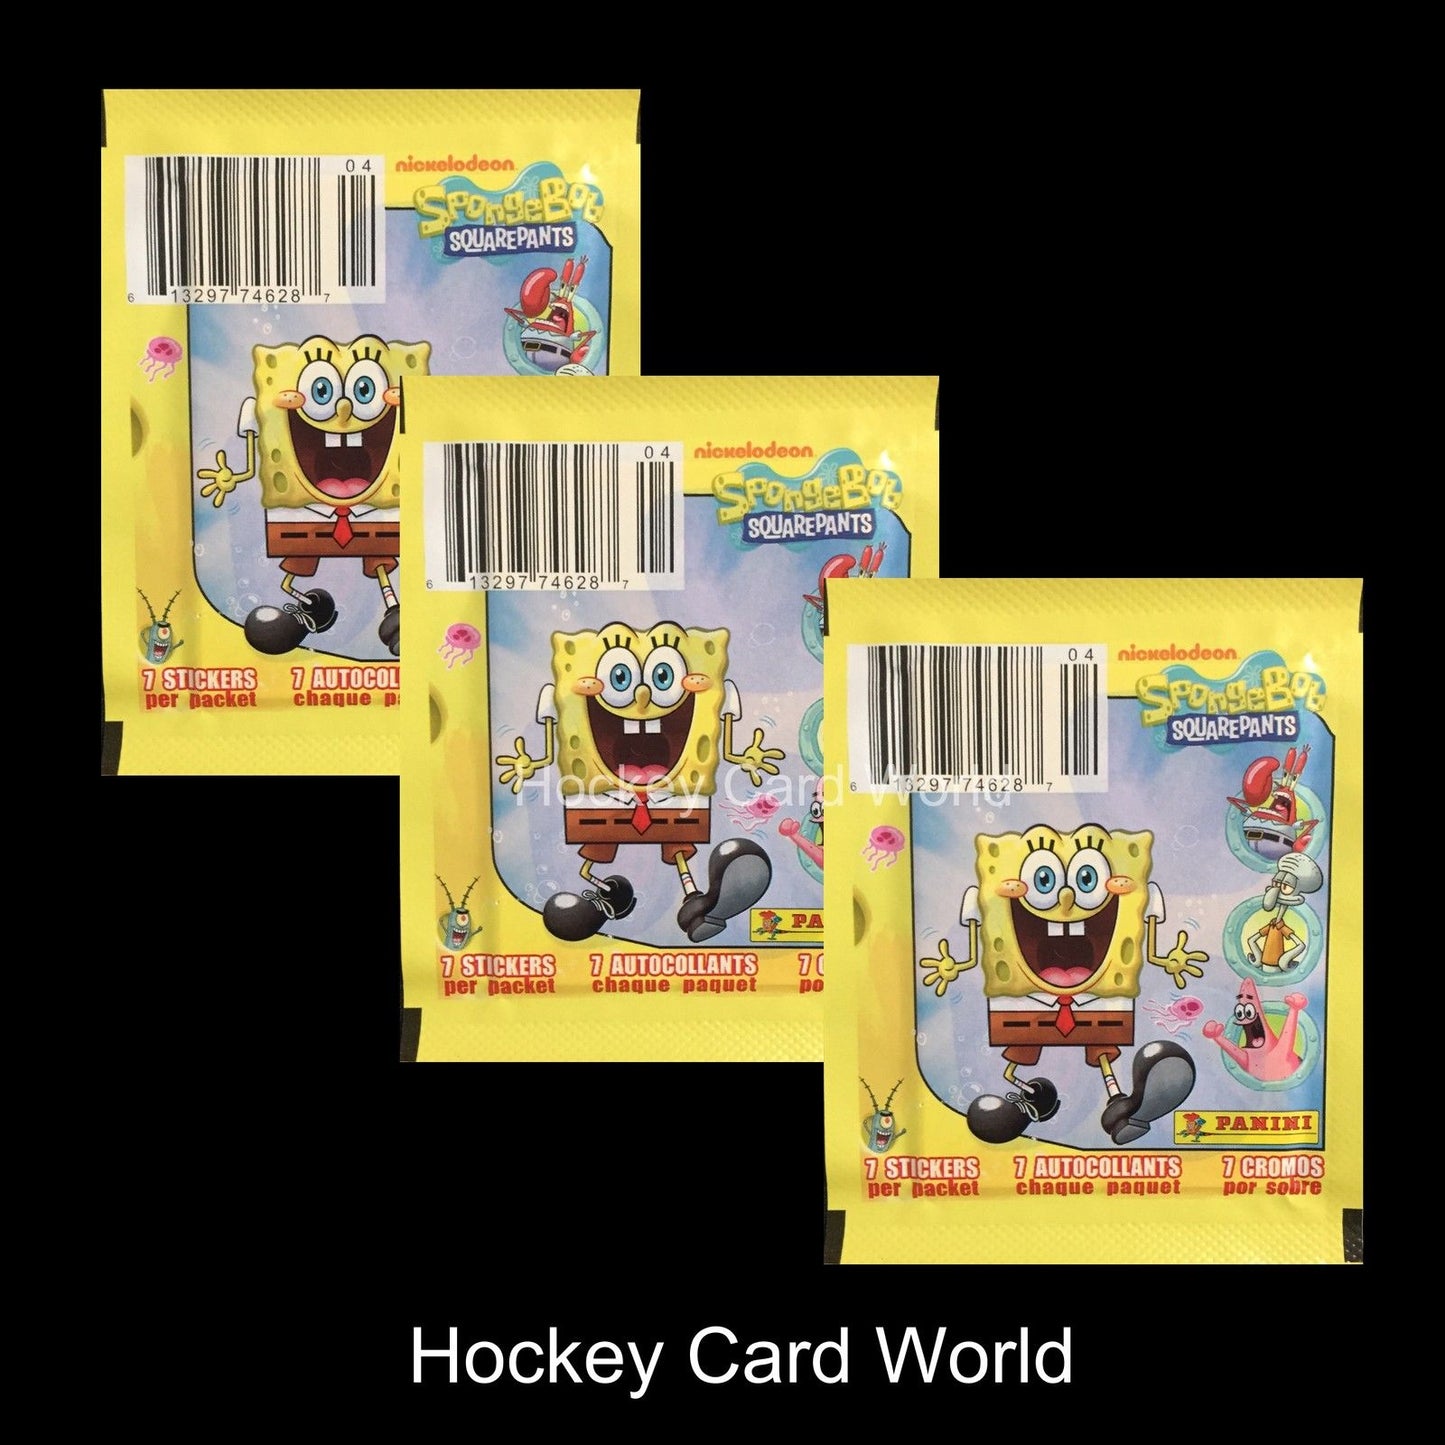 2011 SpongeBob SquarePants Album Sticker Pack x3 (3 Pack Lot -21 Stickers)